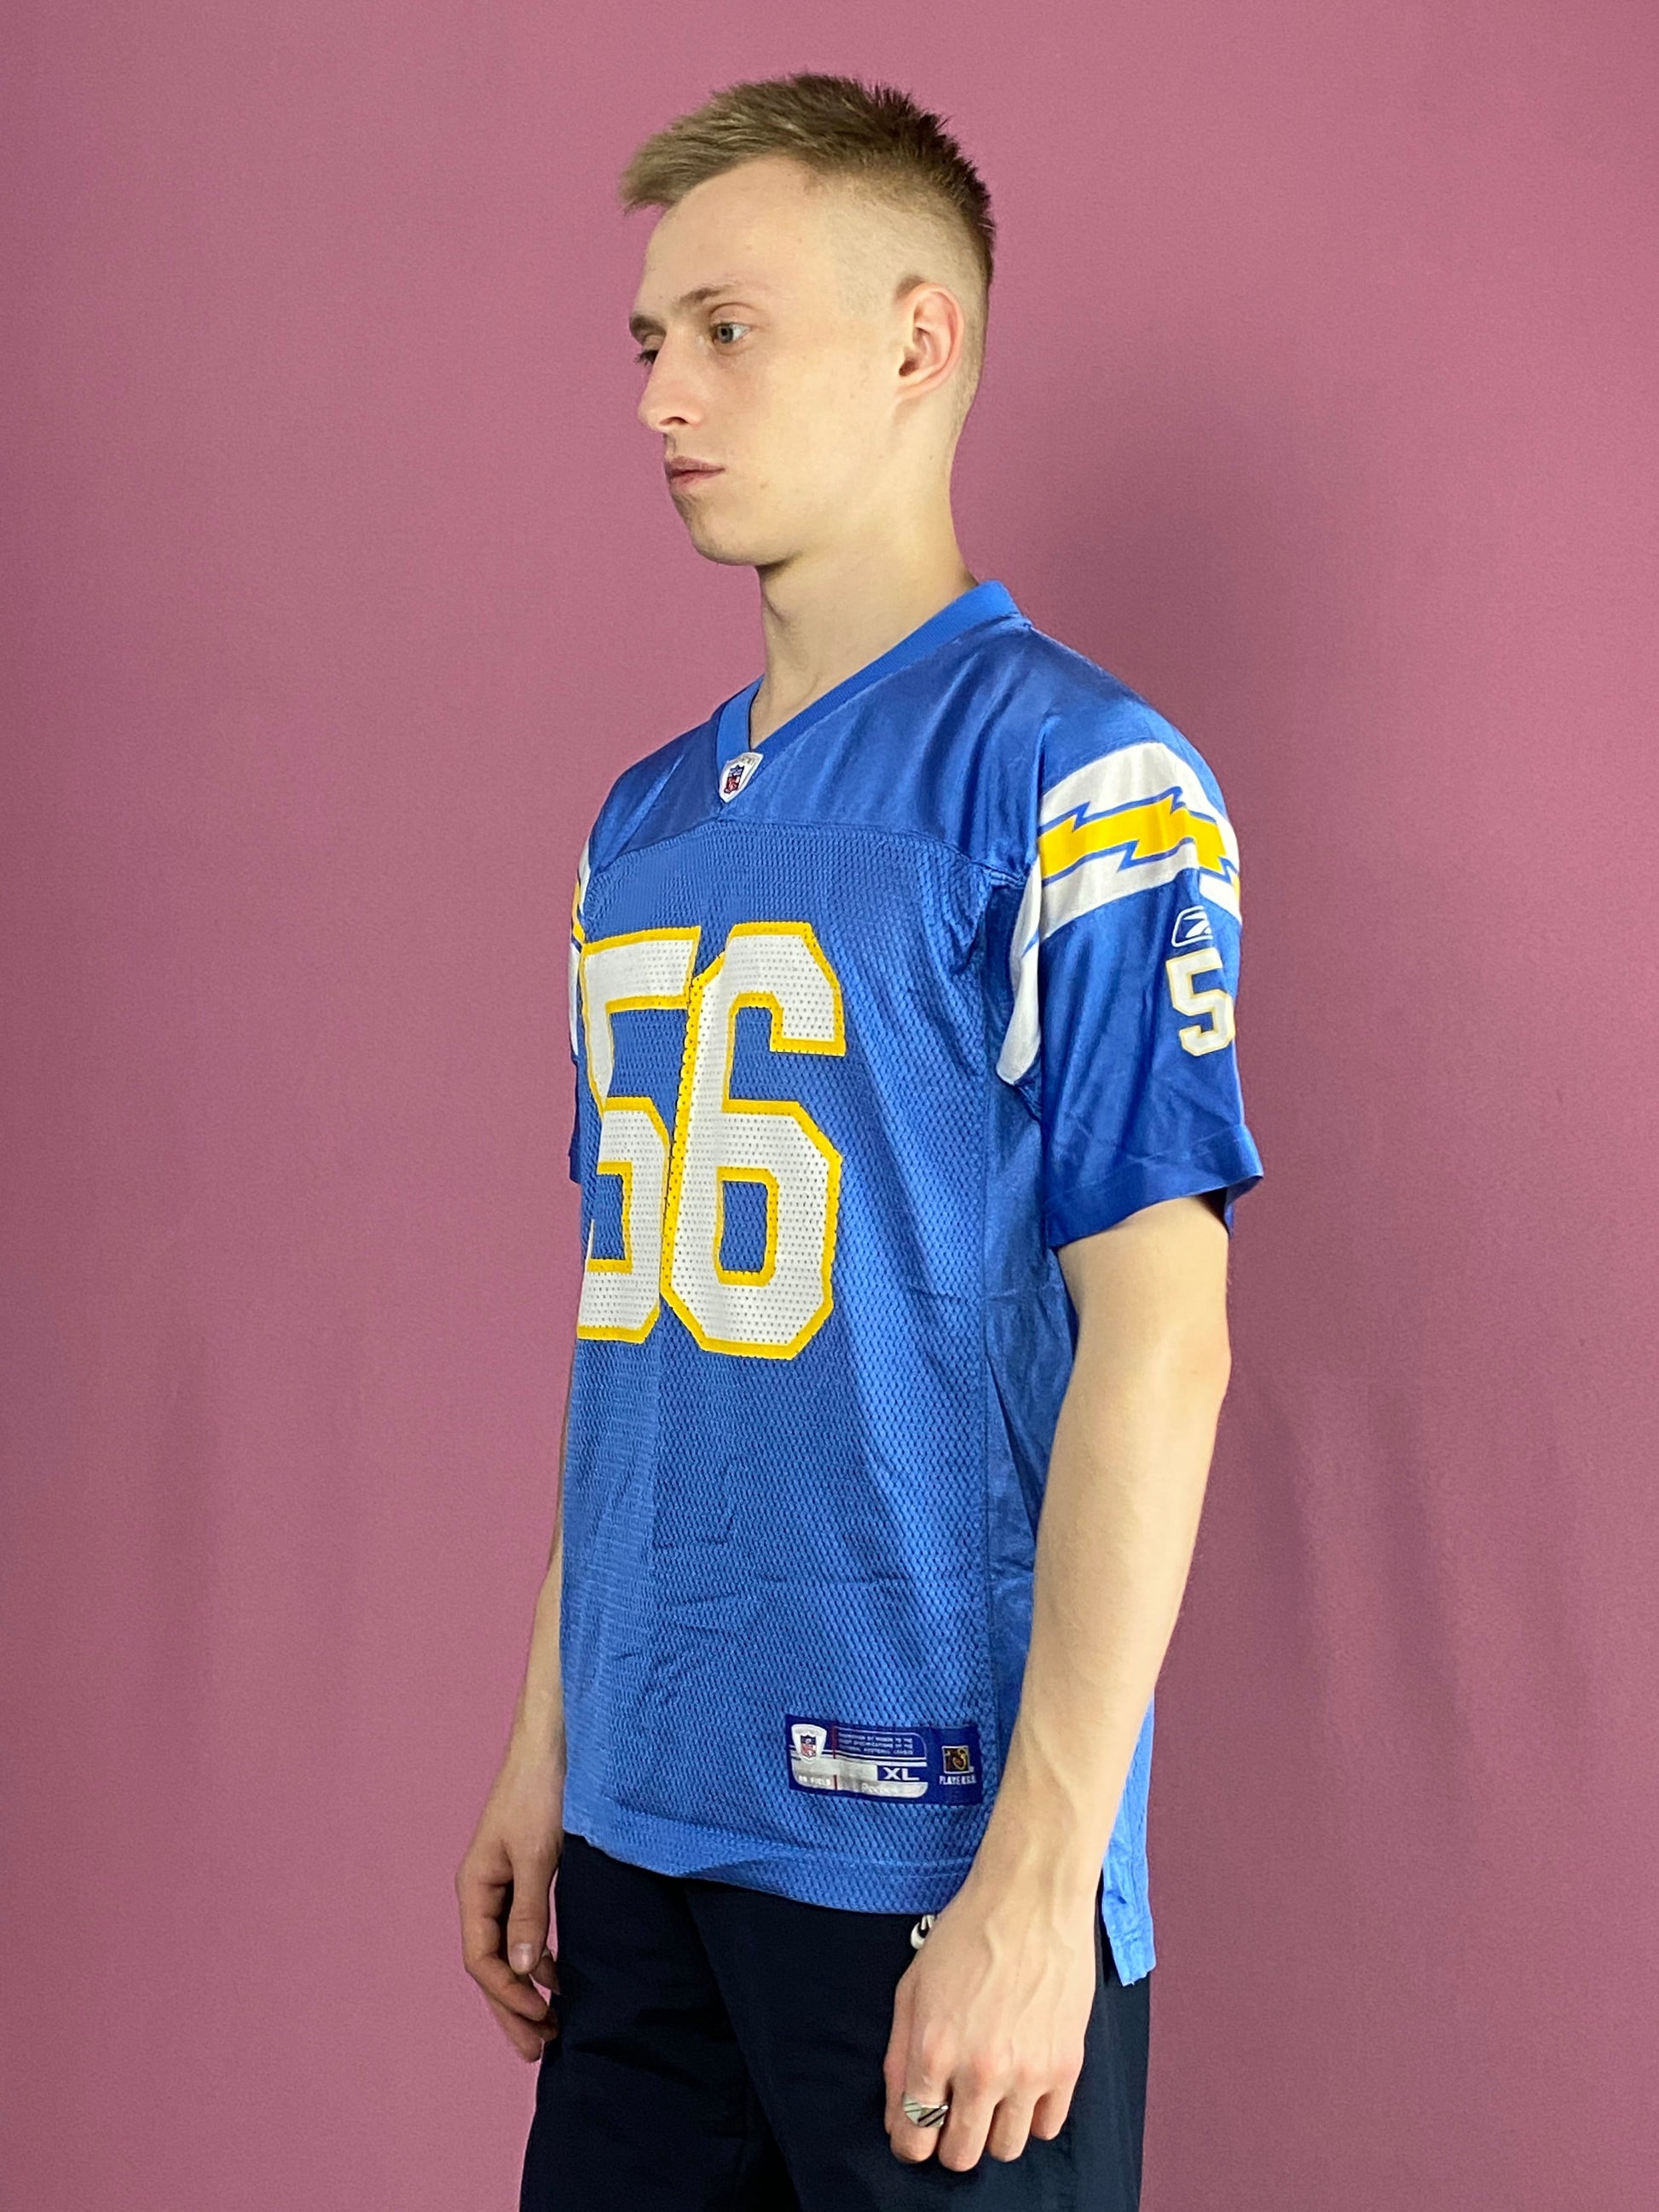 Shawne Merriman Reebok NFL Youth T-Shirt - XL Blue Polyester